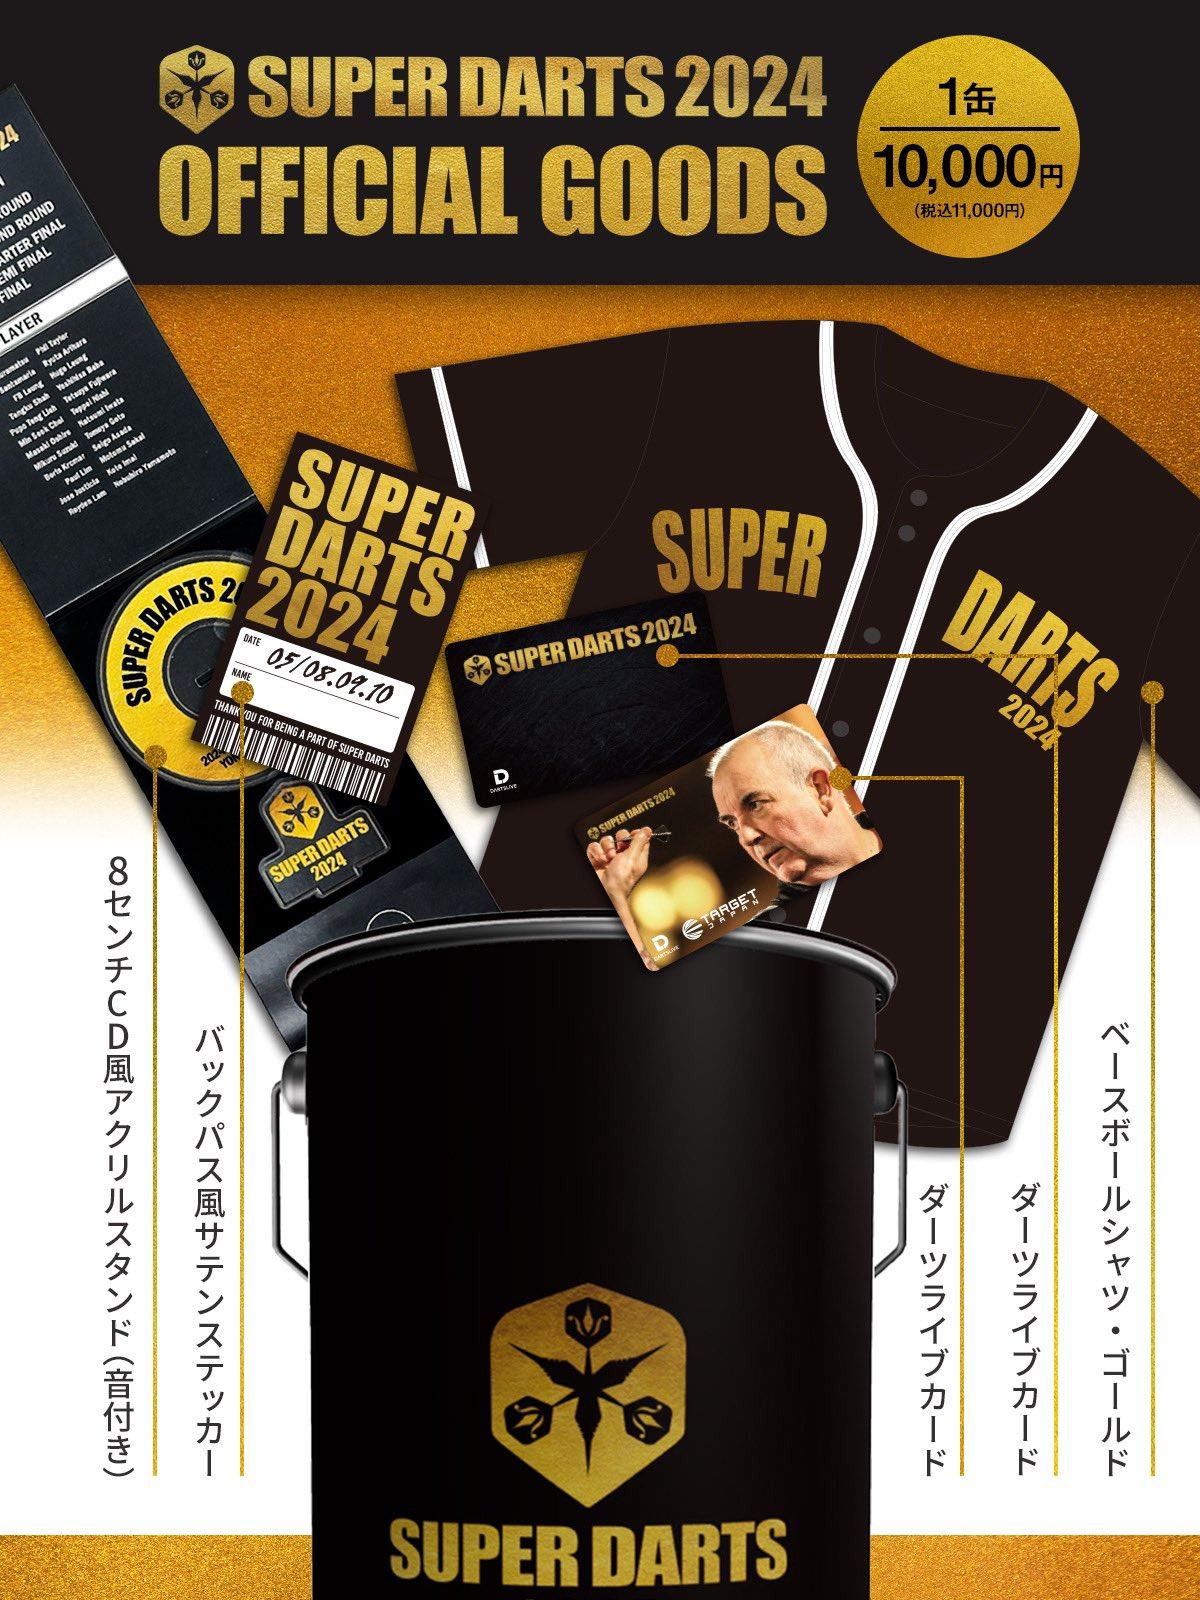 Super Darts 2024 Official goods